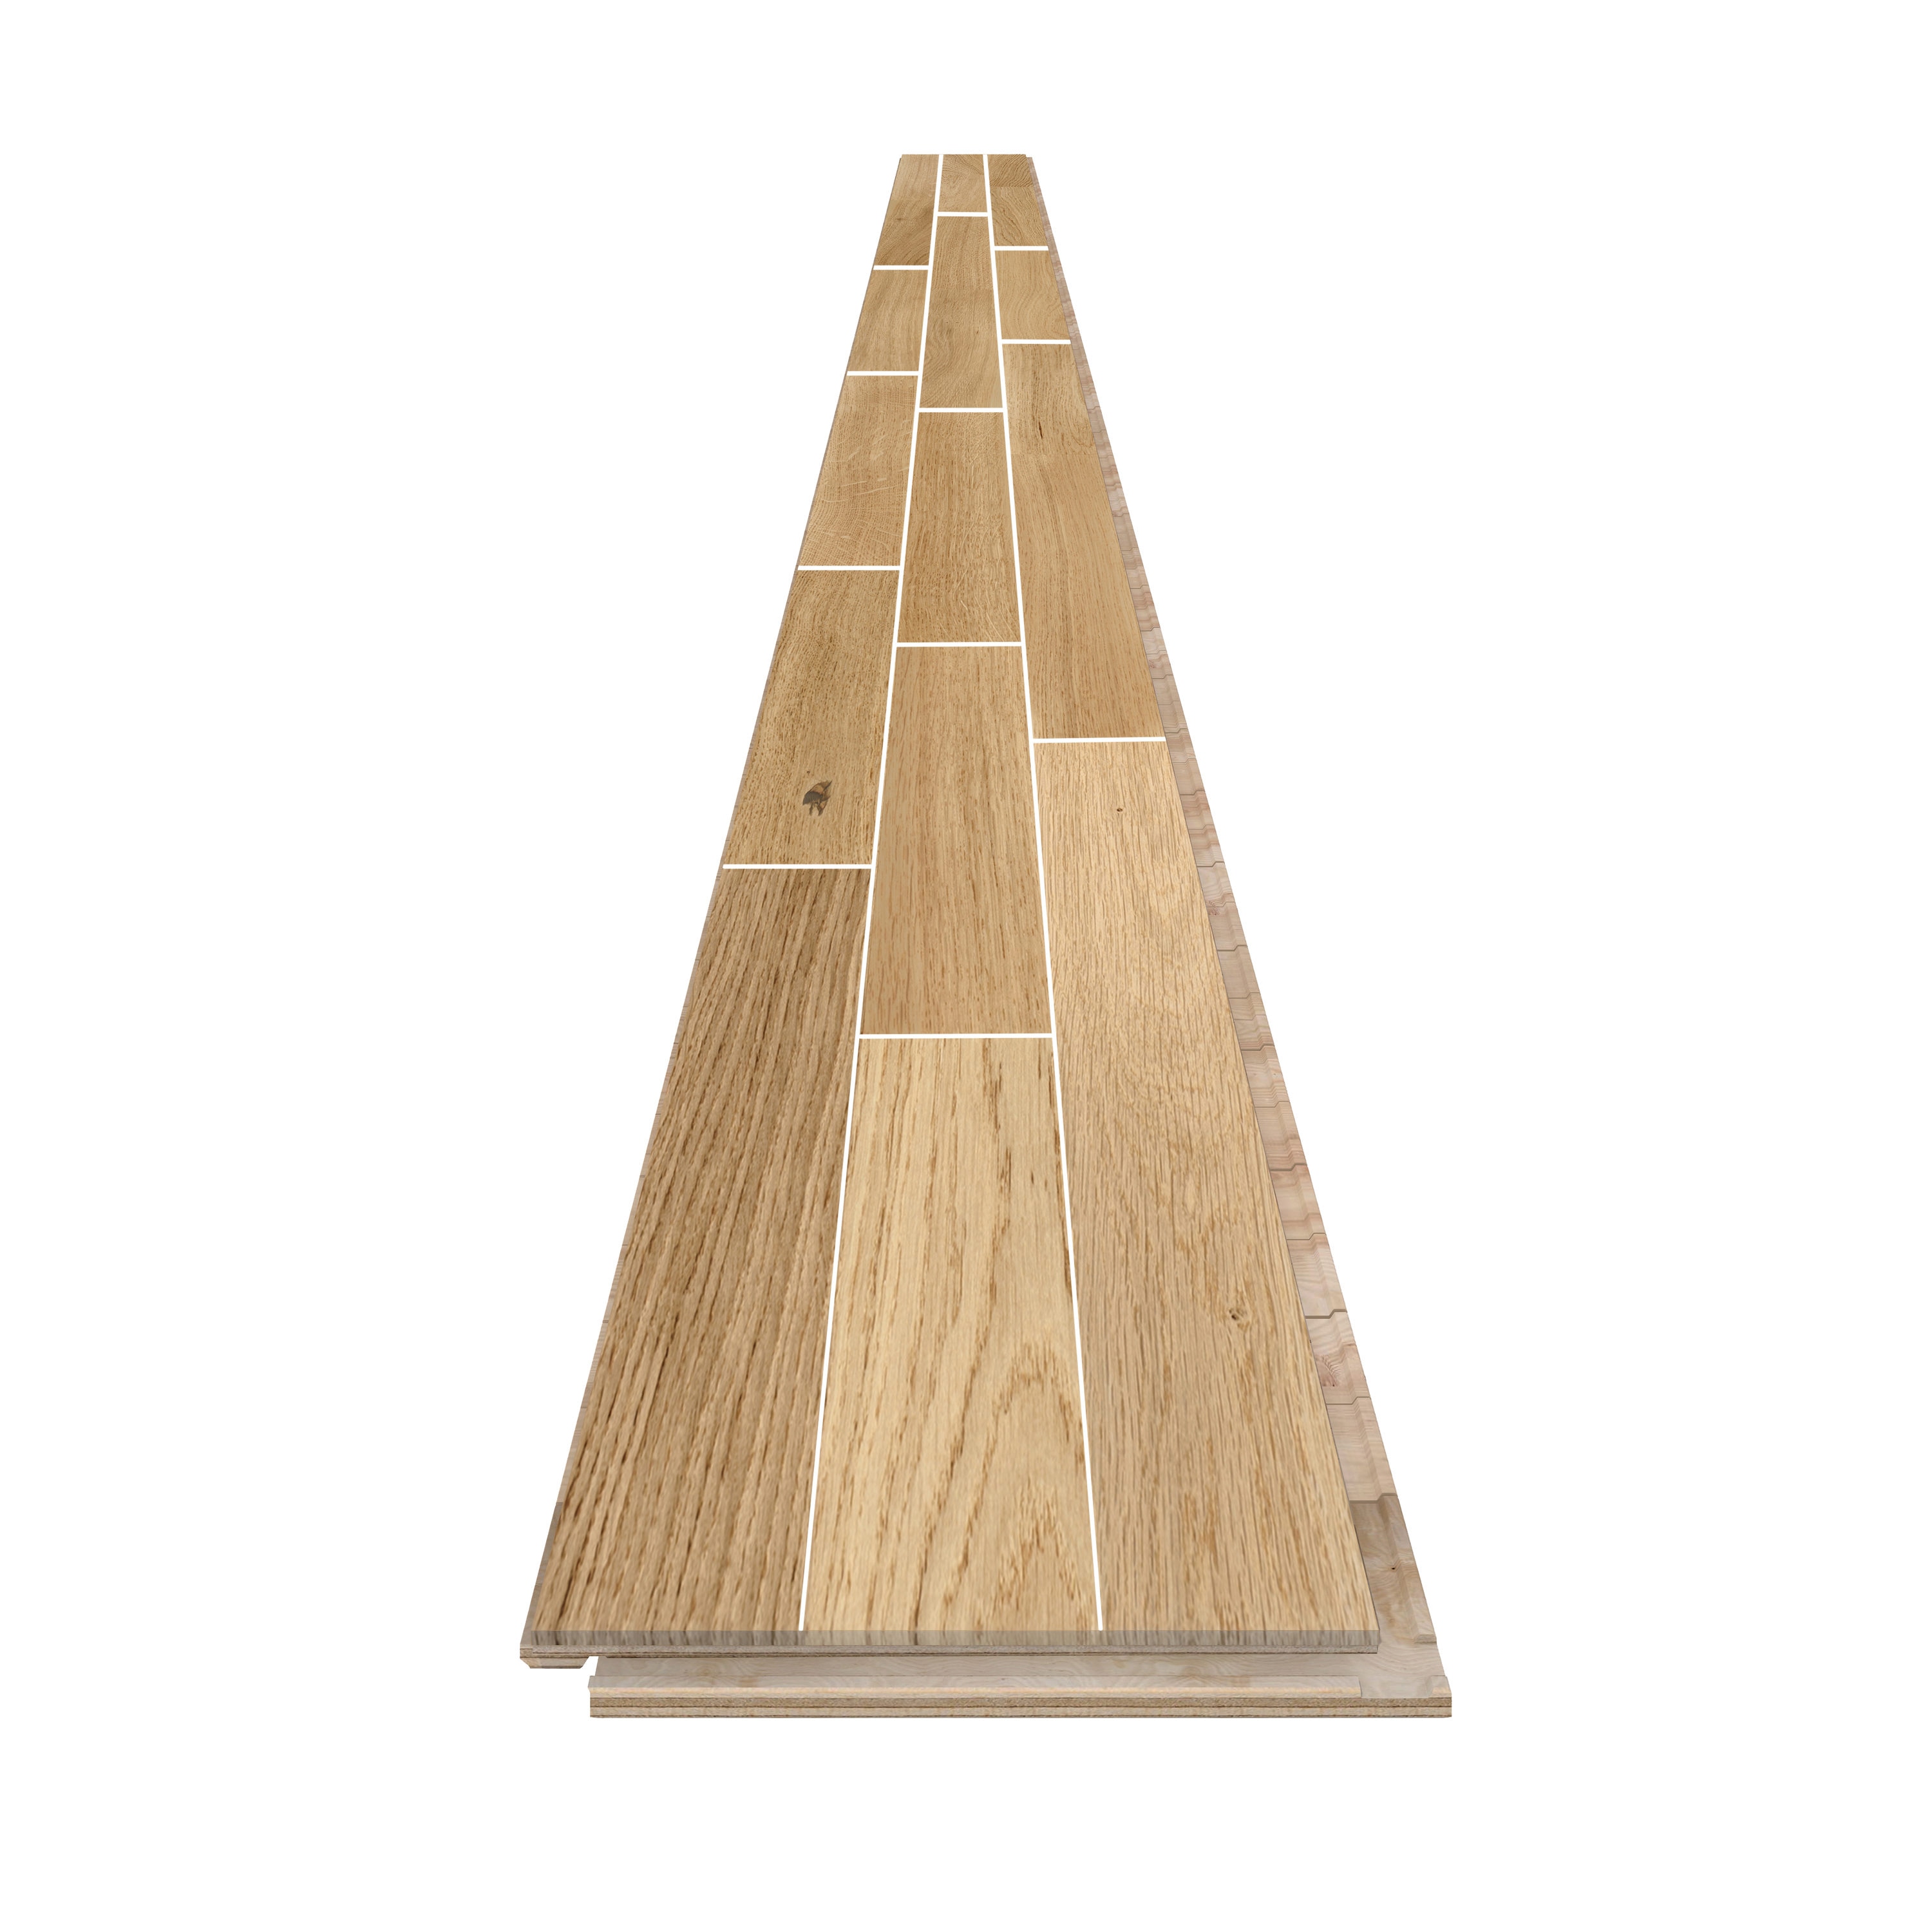 Endura Plus – White Sand 02013 - Southern Floor Co. - LVP, Hardwood, Tile,  Artificial Turf